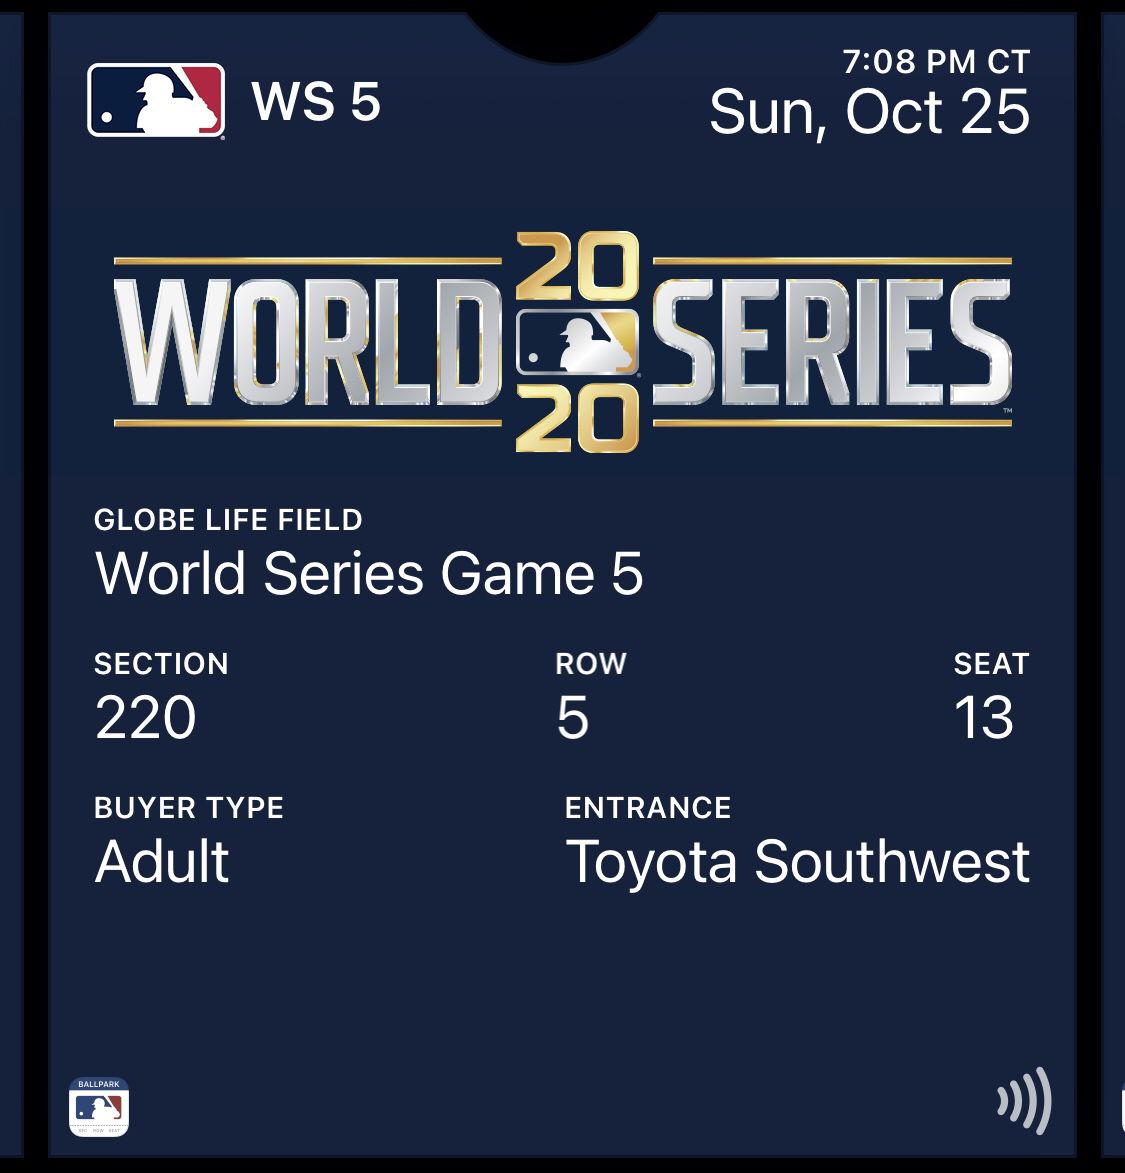 World Series Game 5 - 2 tickets